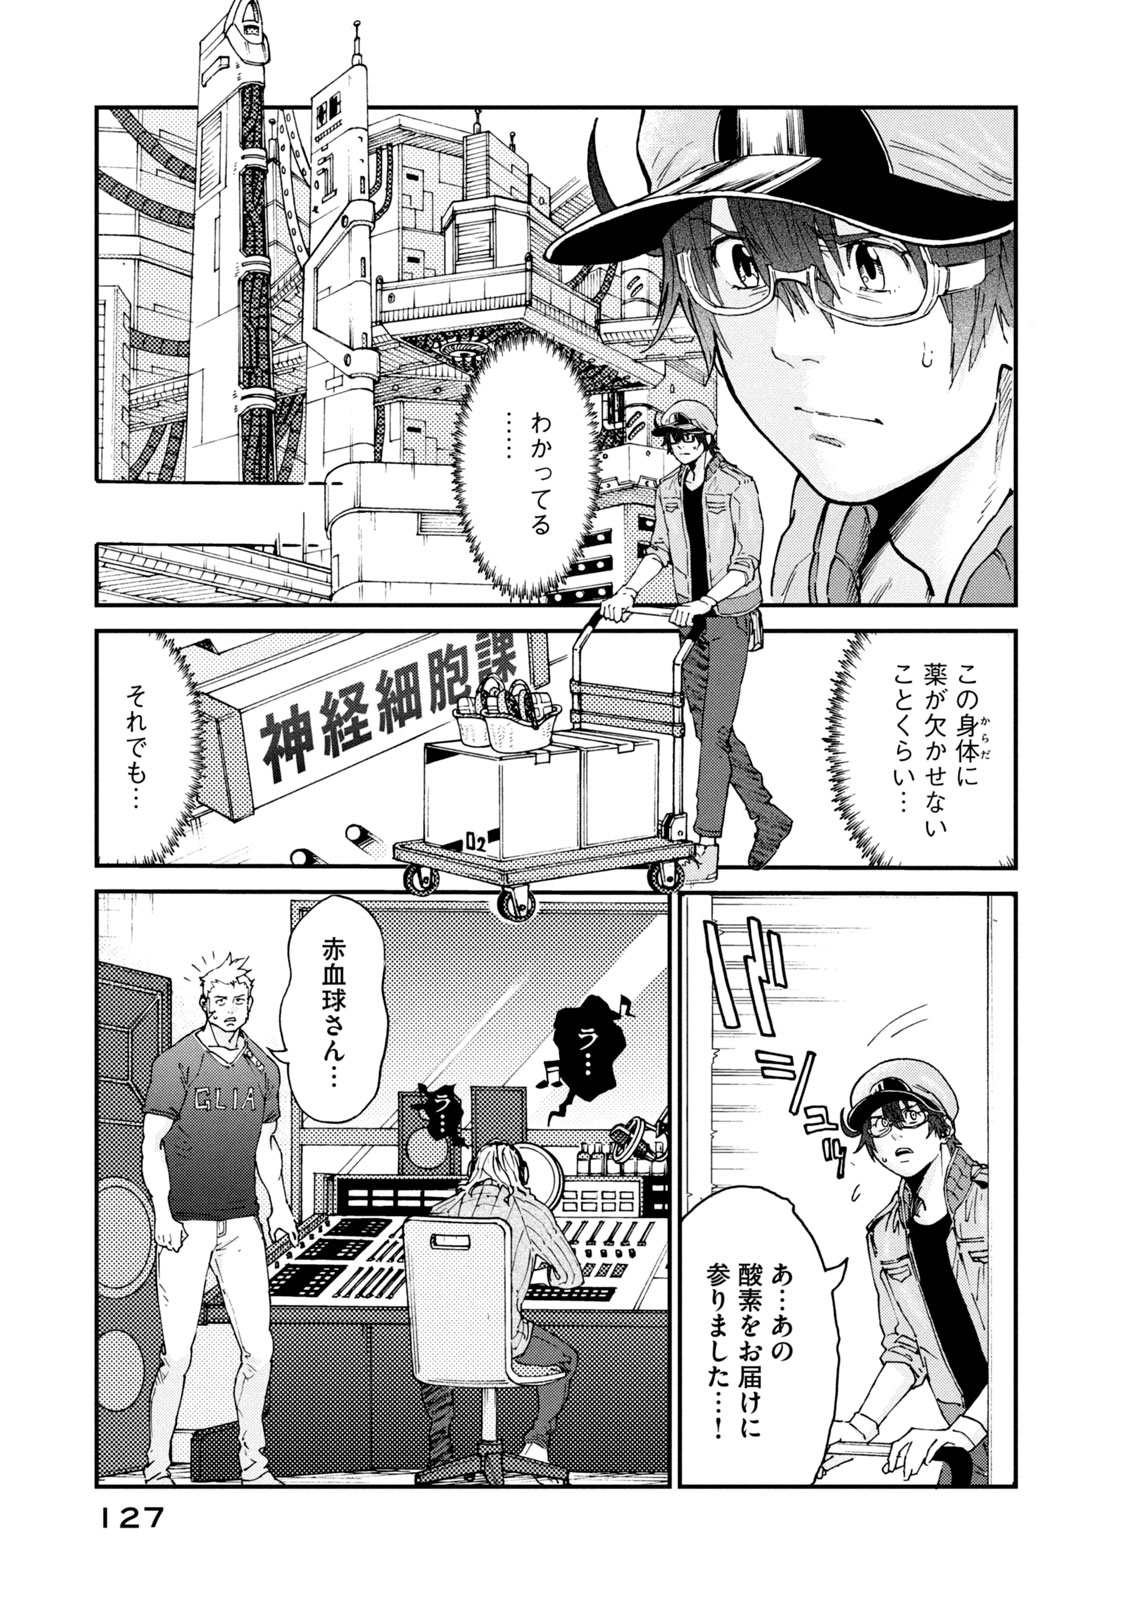 Hataraku Saibou BLACK - Chapter 36 - Page 5